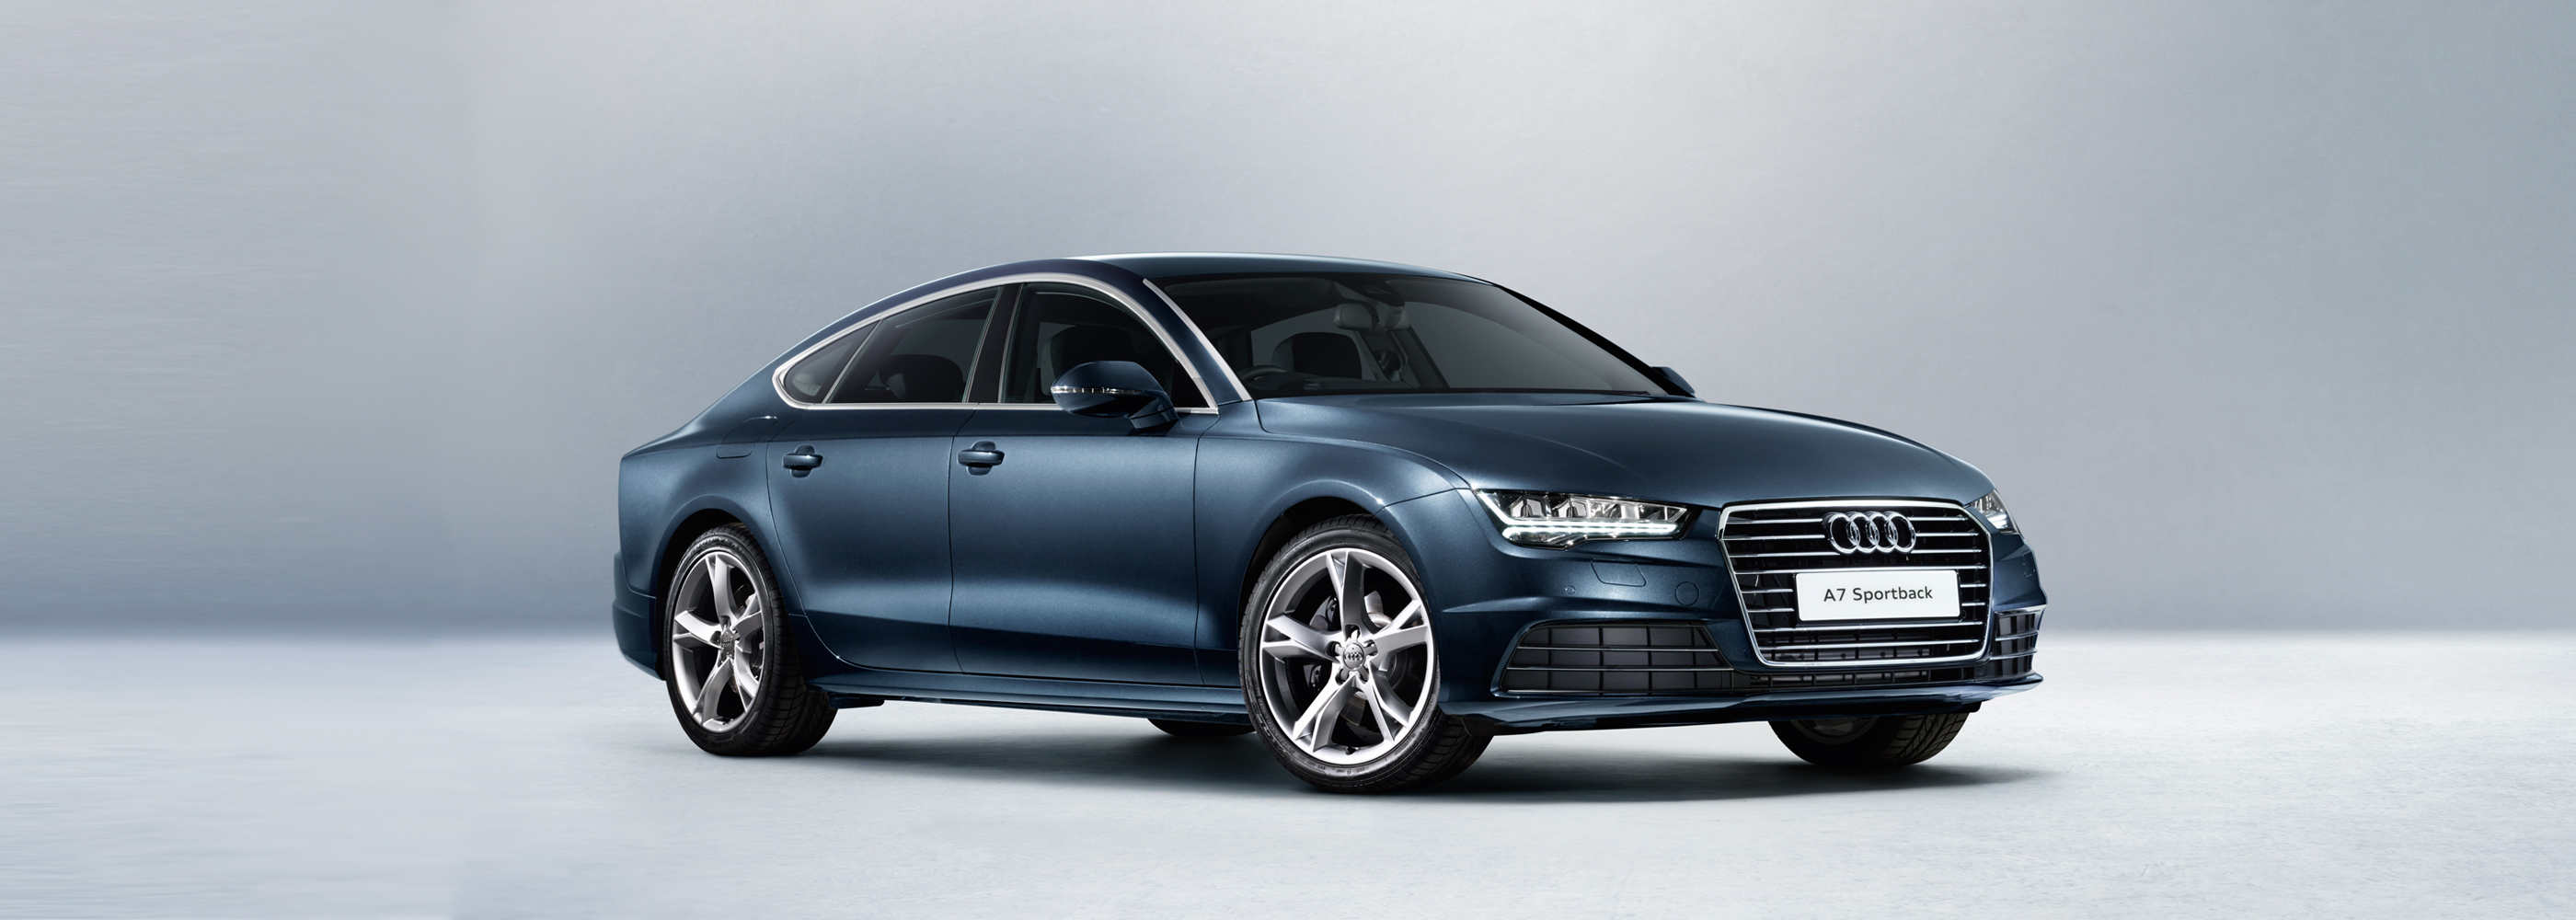 Audi will focus on aluminium materials and serial-component development for the lightweight-design Audi ultra.